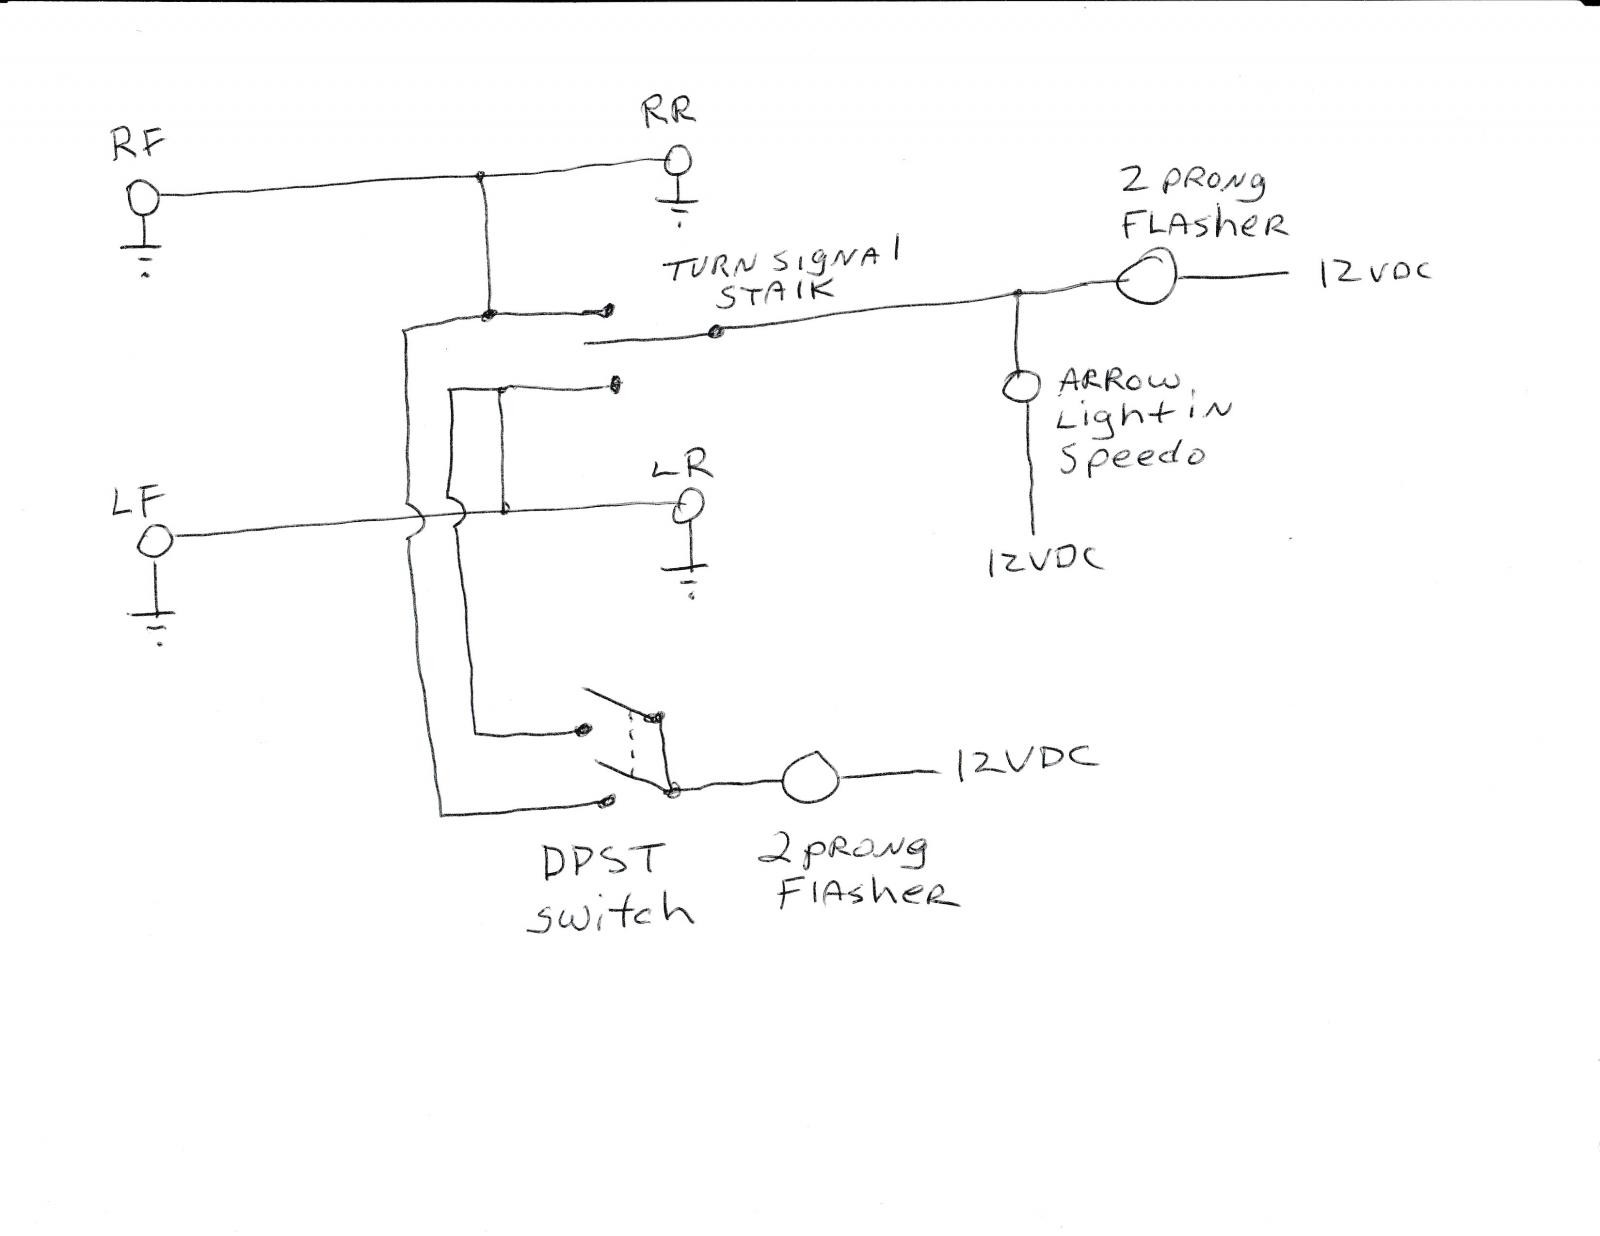 Three Prong Flasher Wiring | My Wiring DIagram